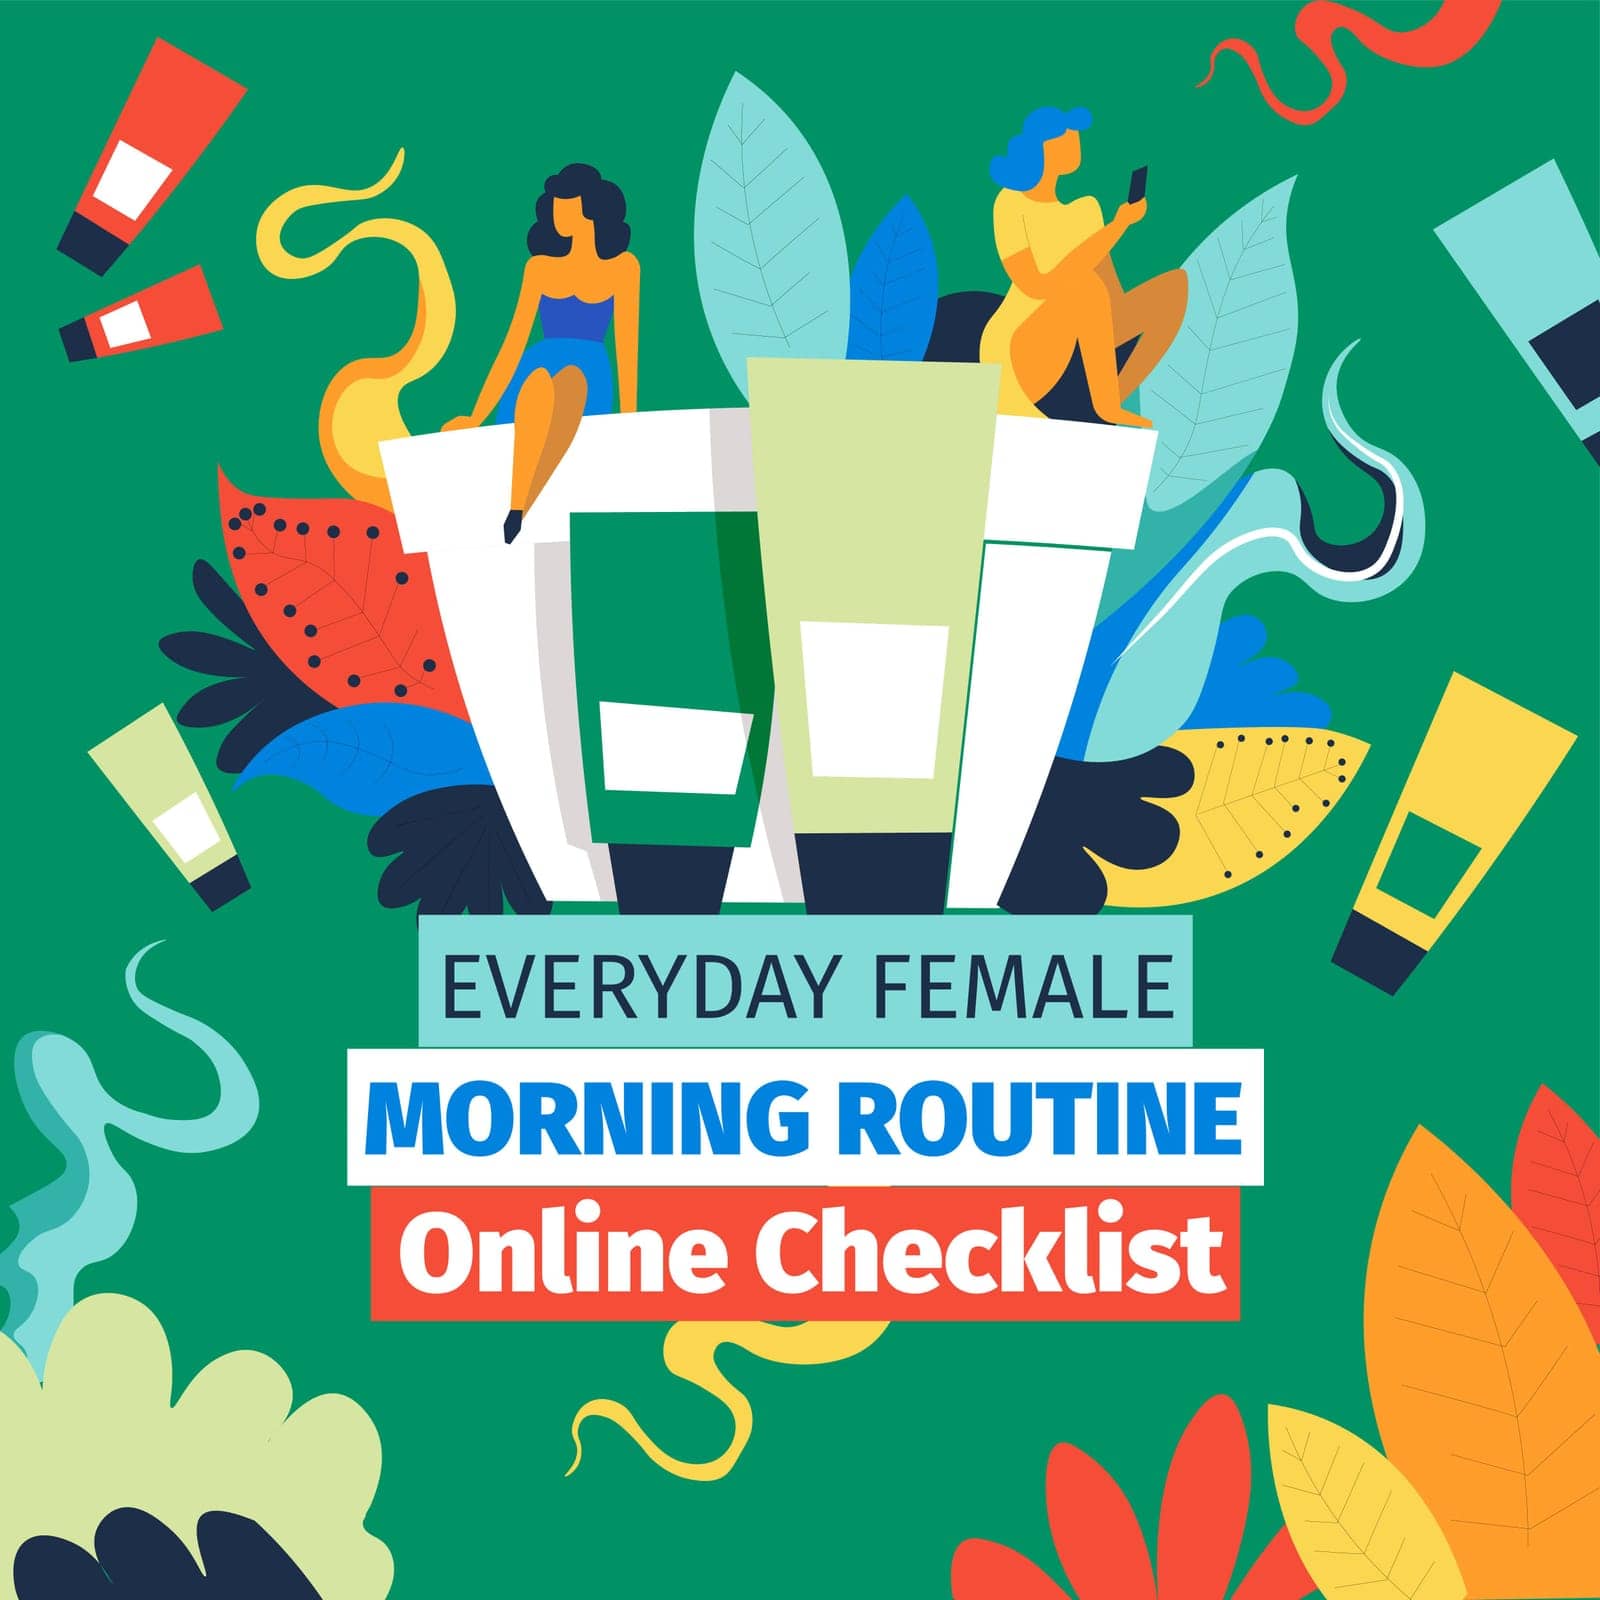 Everyday female morning routine online checklist by Sonulkaster